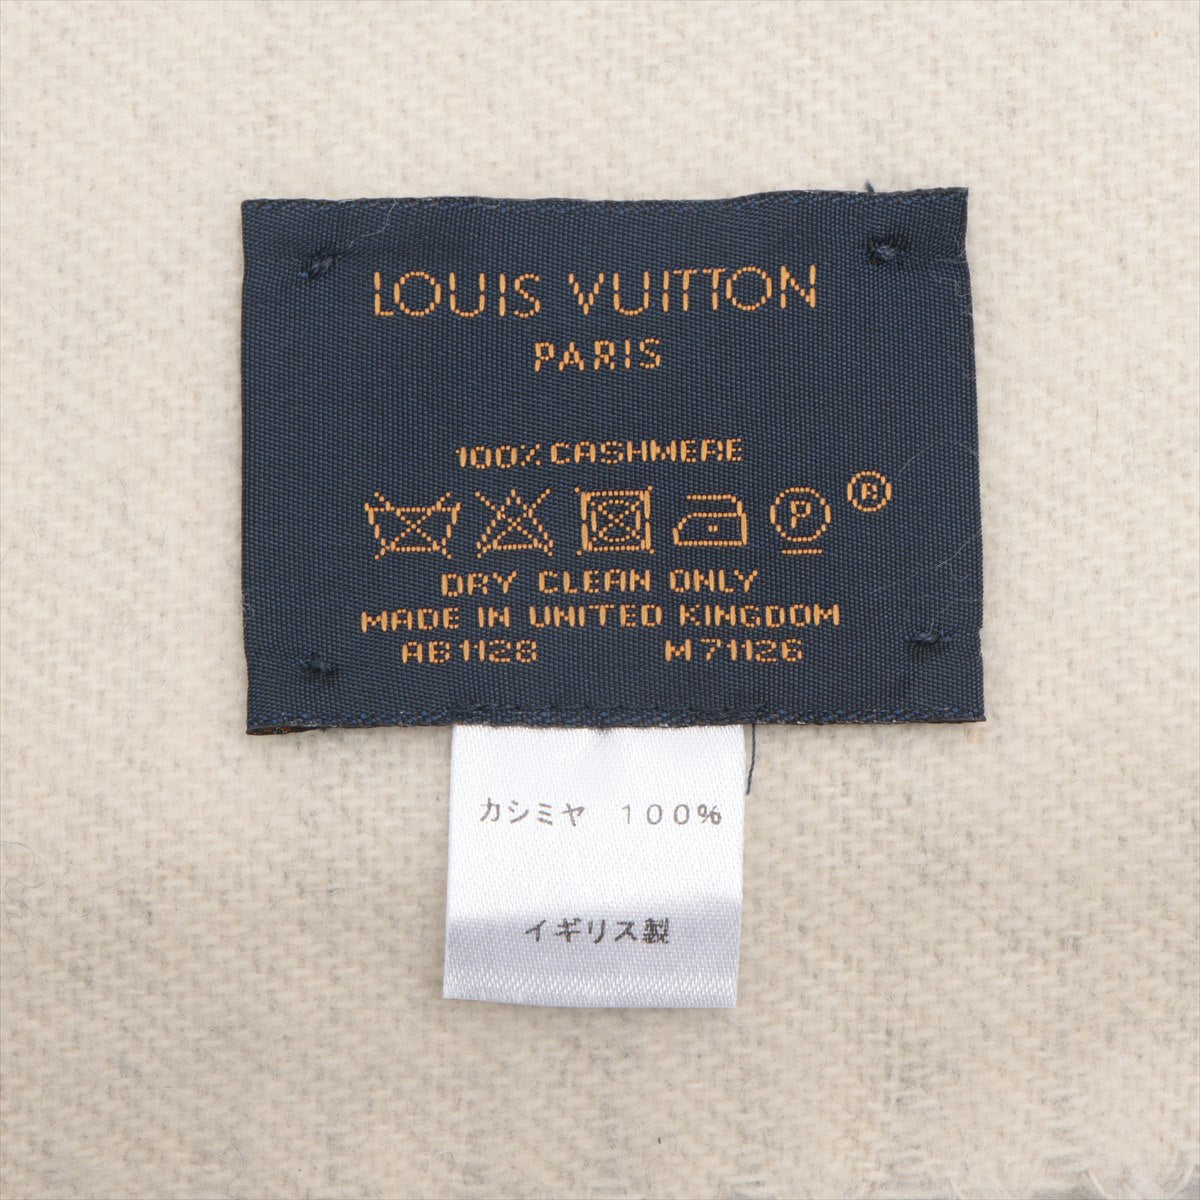 Louis Vuitton M71126 Echarpe Reykjavik AB1128 Scarf Cashmere Grey